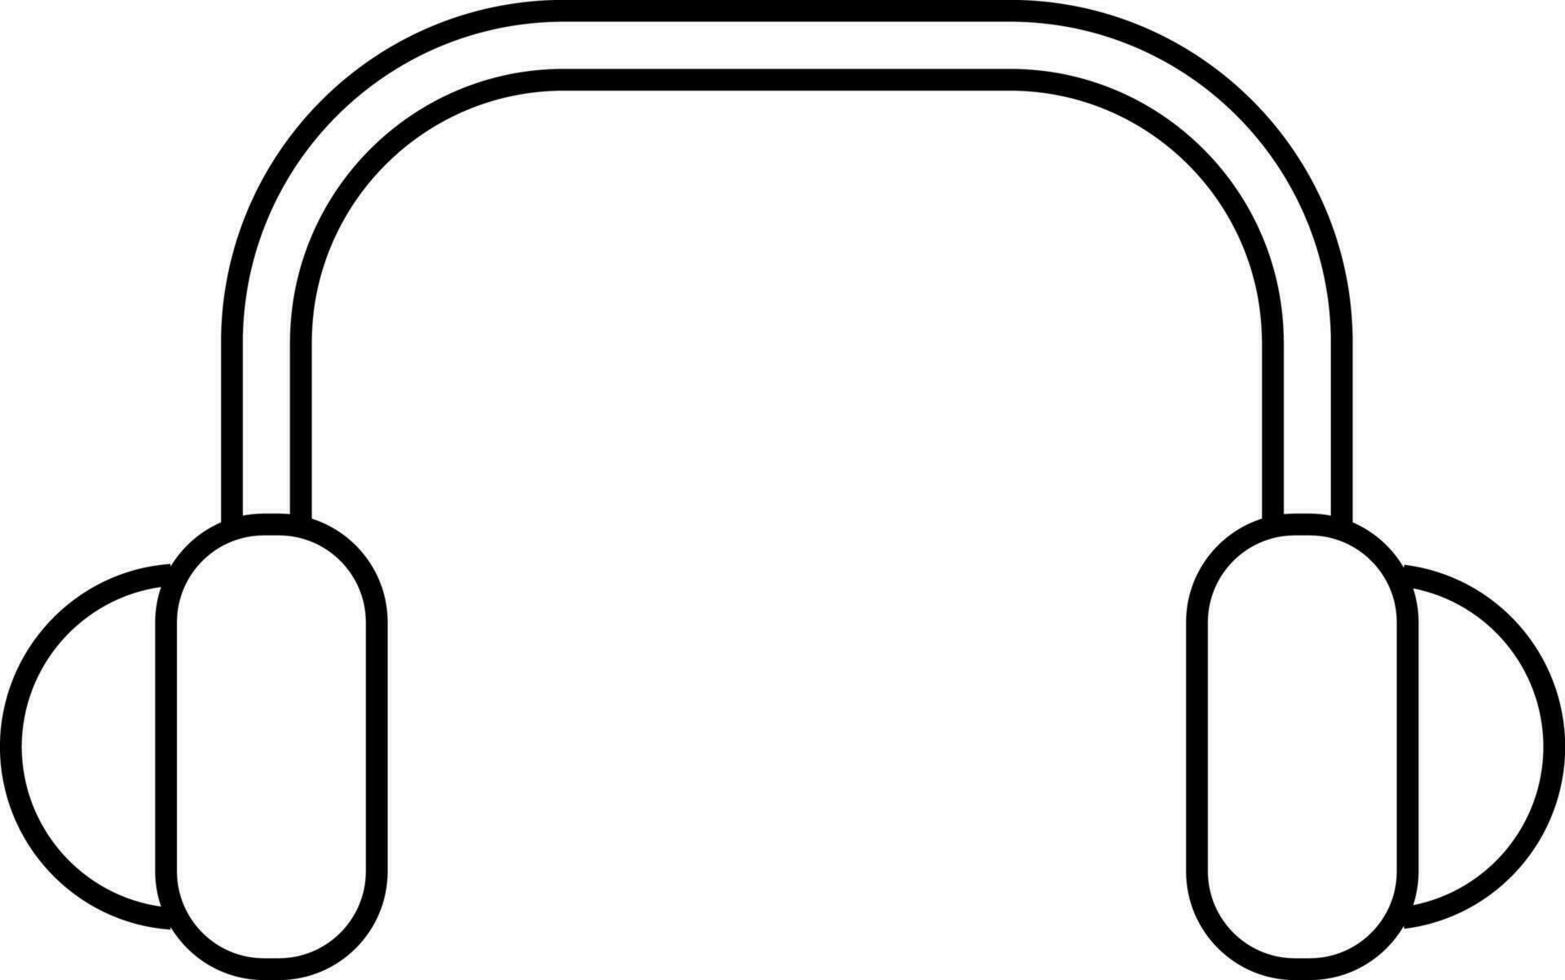 Isolated line stroke icon of Headphone. vector